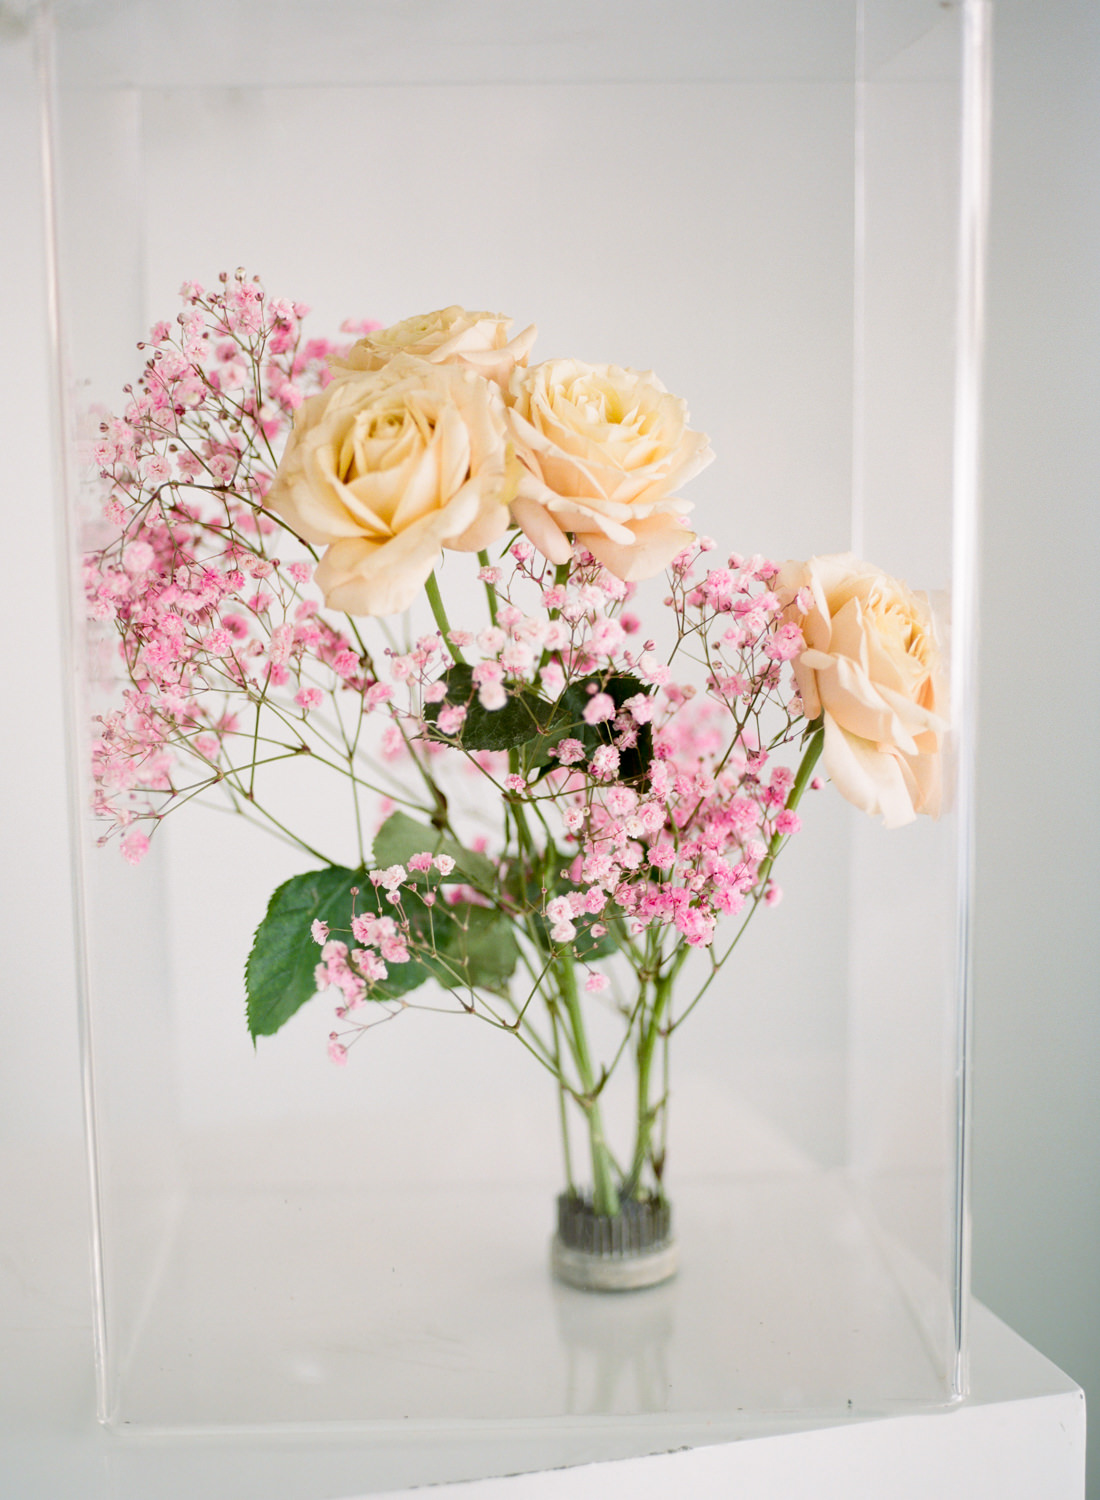 Lavish Floral Design wedding flower inspiration, St. Louis wedding photographer